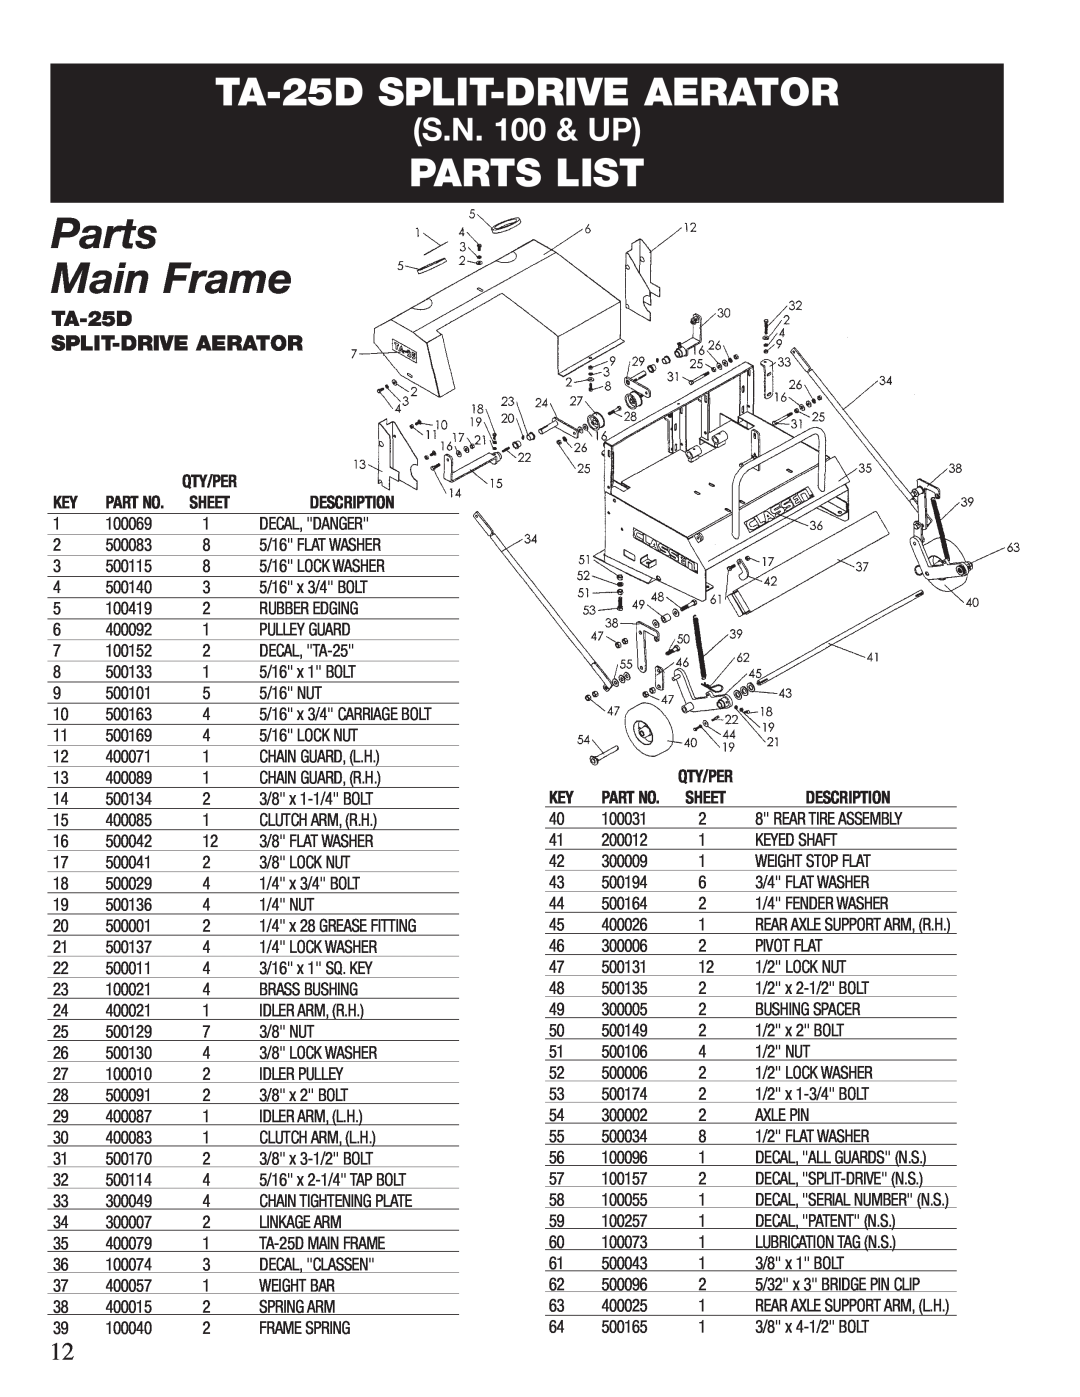 Classen 72-RT, TA-26D TA-25D SPLIT-DRIVE AERATOR, Parts Main Frame, Parts List, S.N. 100 & UP, Qty/Per, Sheet, Description 